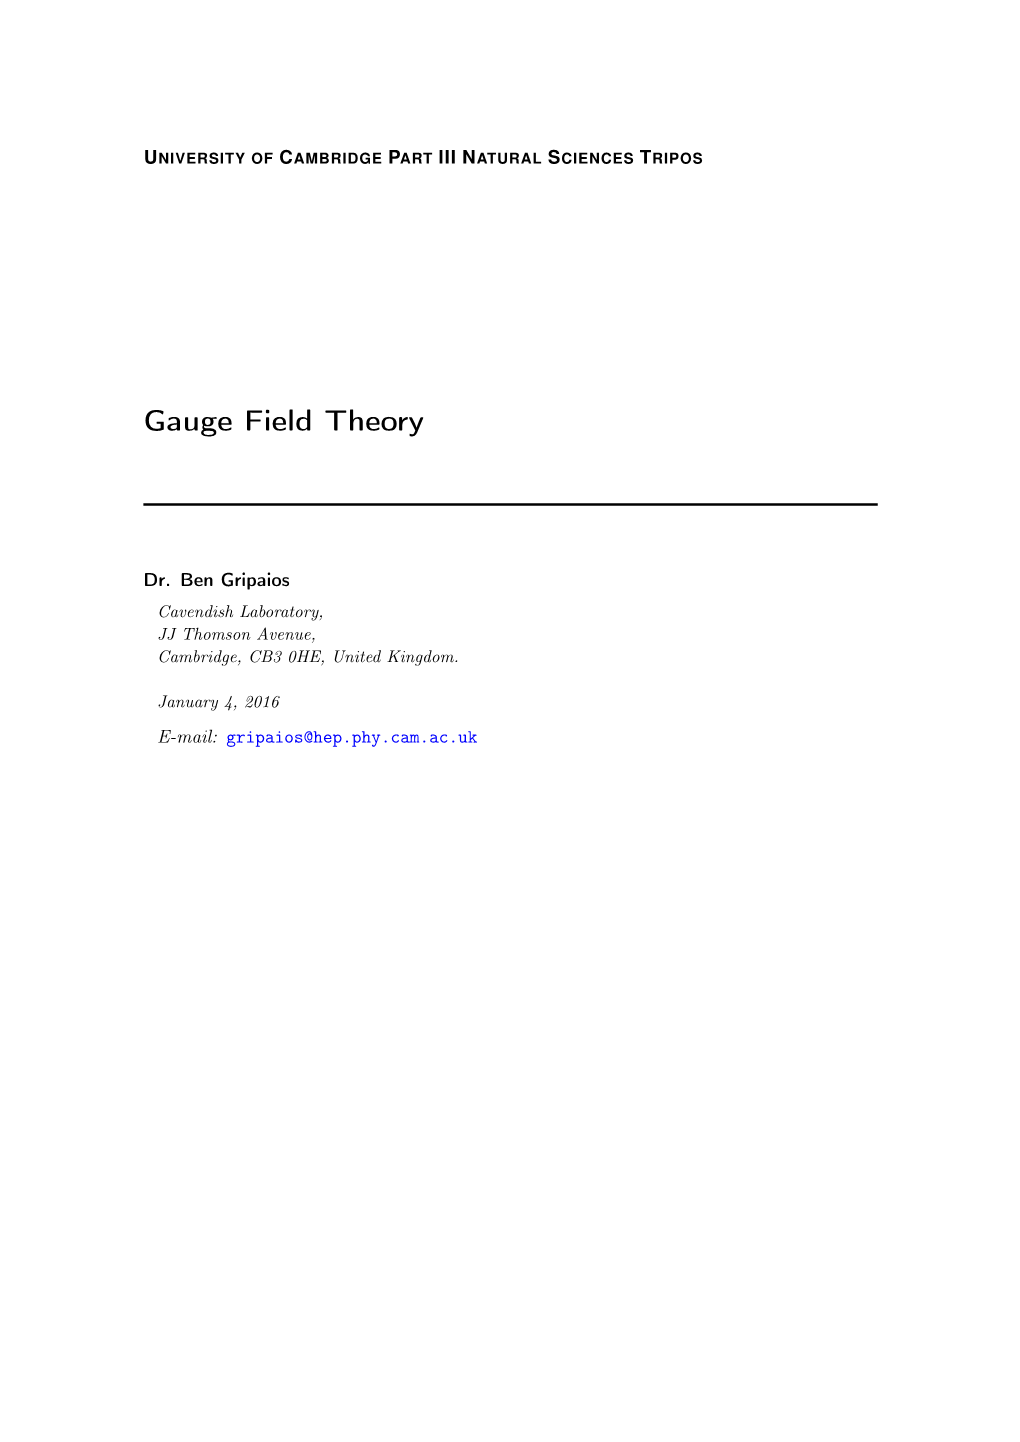 Gauge Field Theory